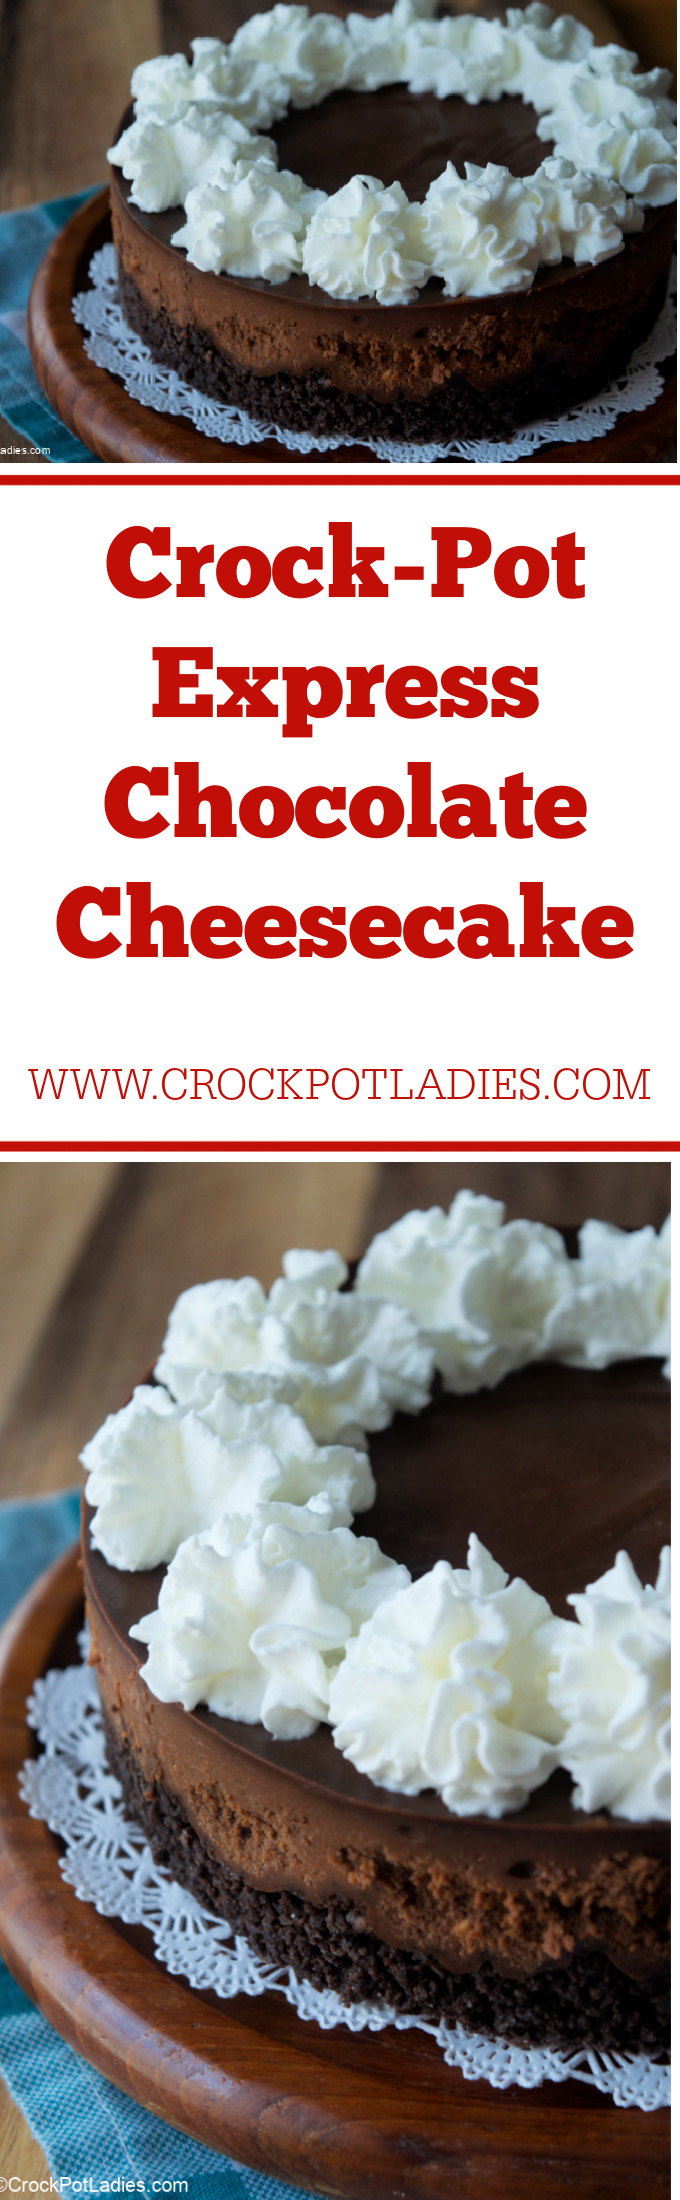 Crock-Pot Express Chocolate Cheesecake